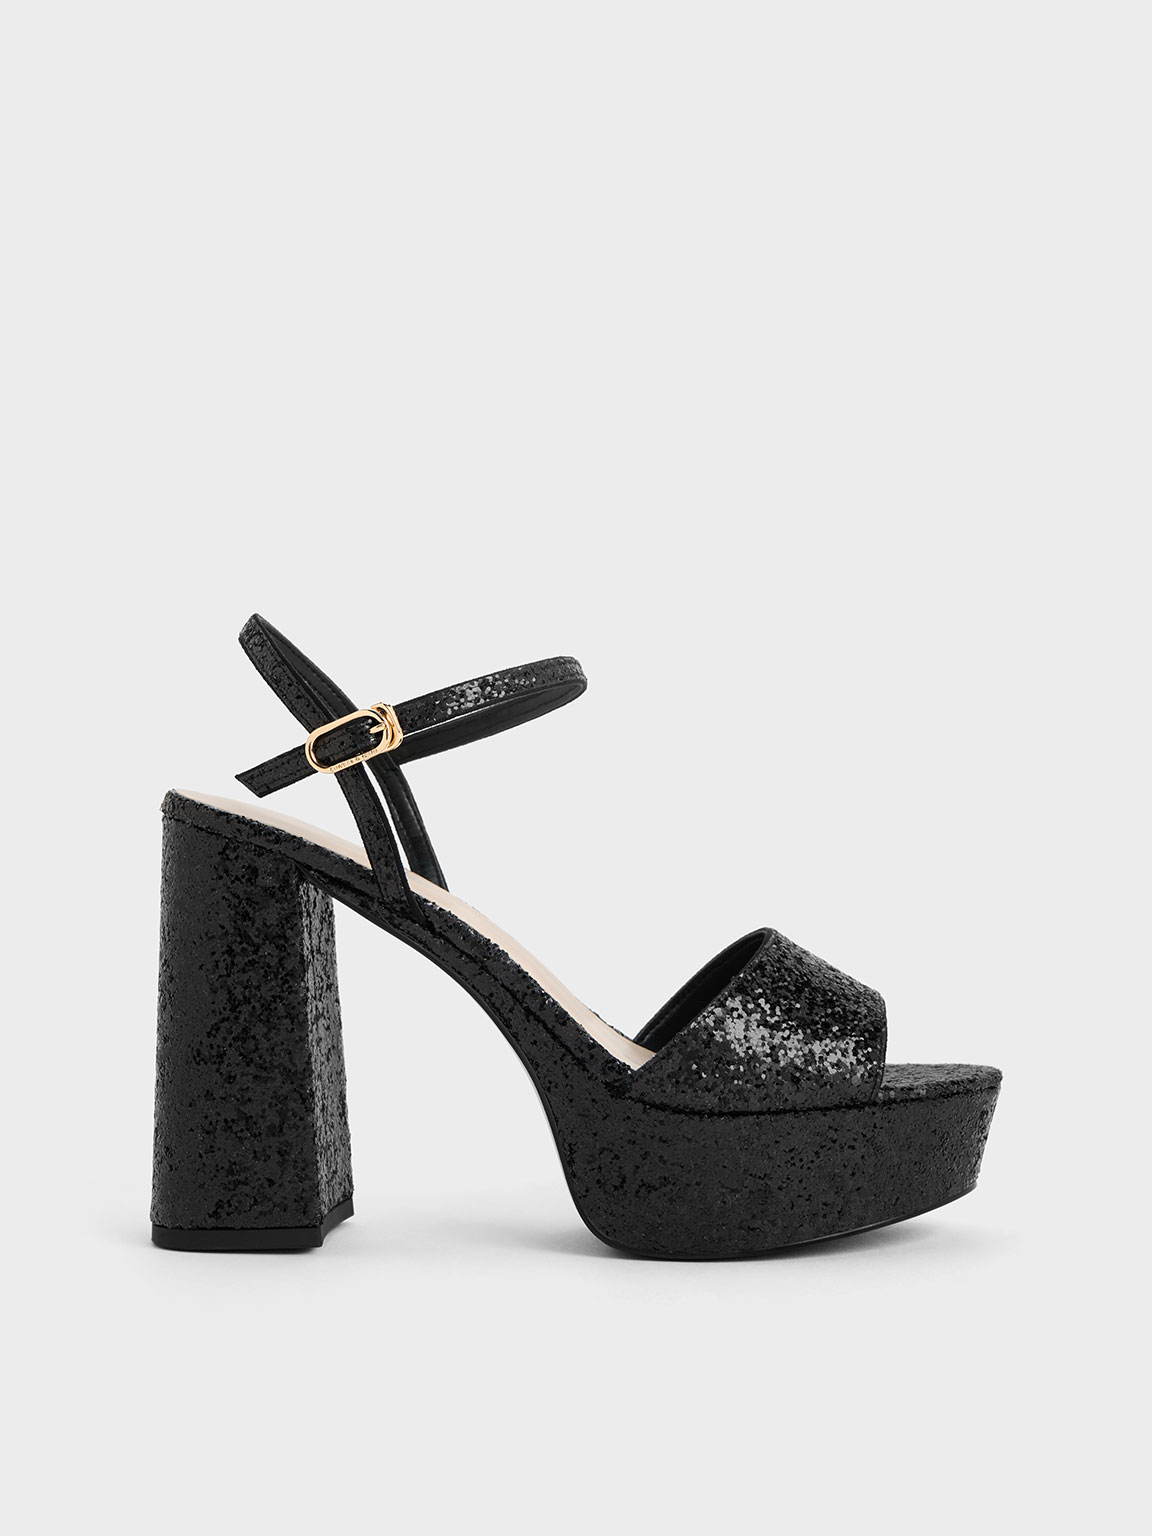 Casadei Women's Glittered Blade Pumps | Black glitter shoes, Black glitter  heels, Black high heel pumps